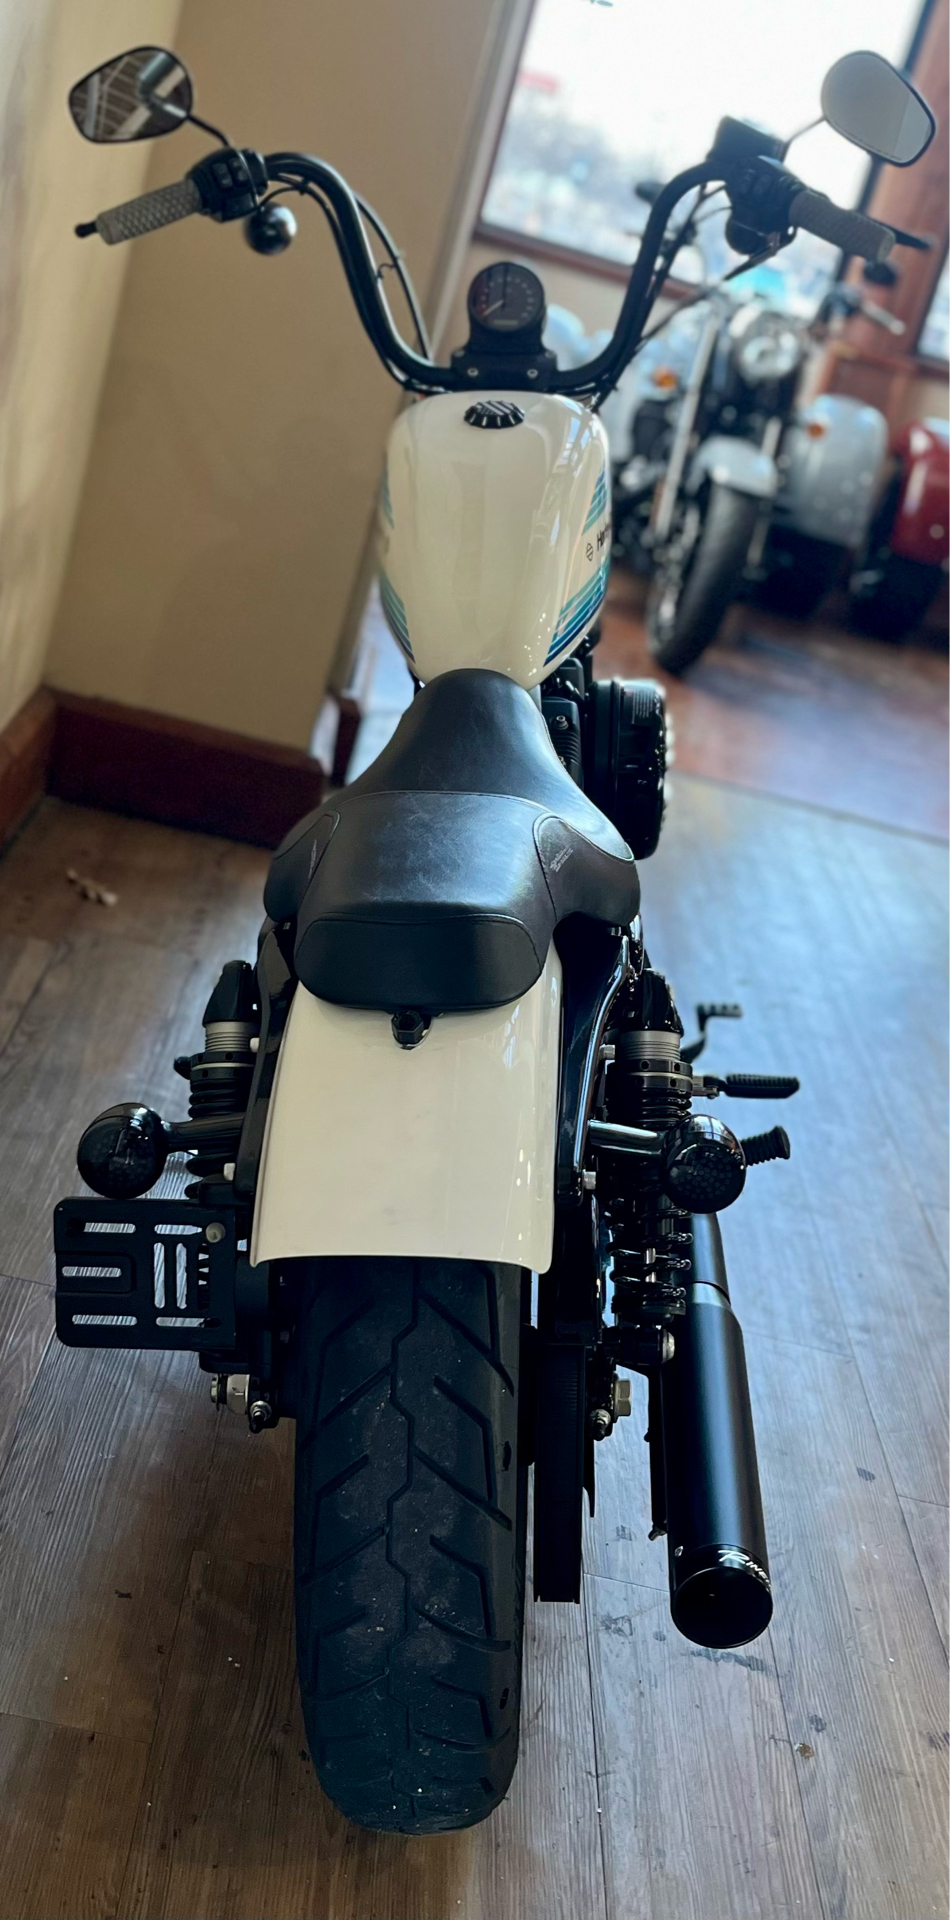 2018 Harley-Davidson Iron 1200™ in Loveland, Colorado - Photo 5